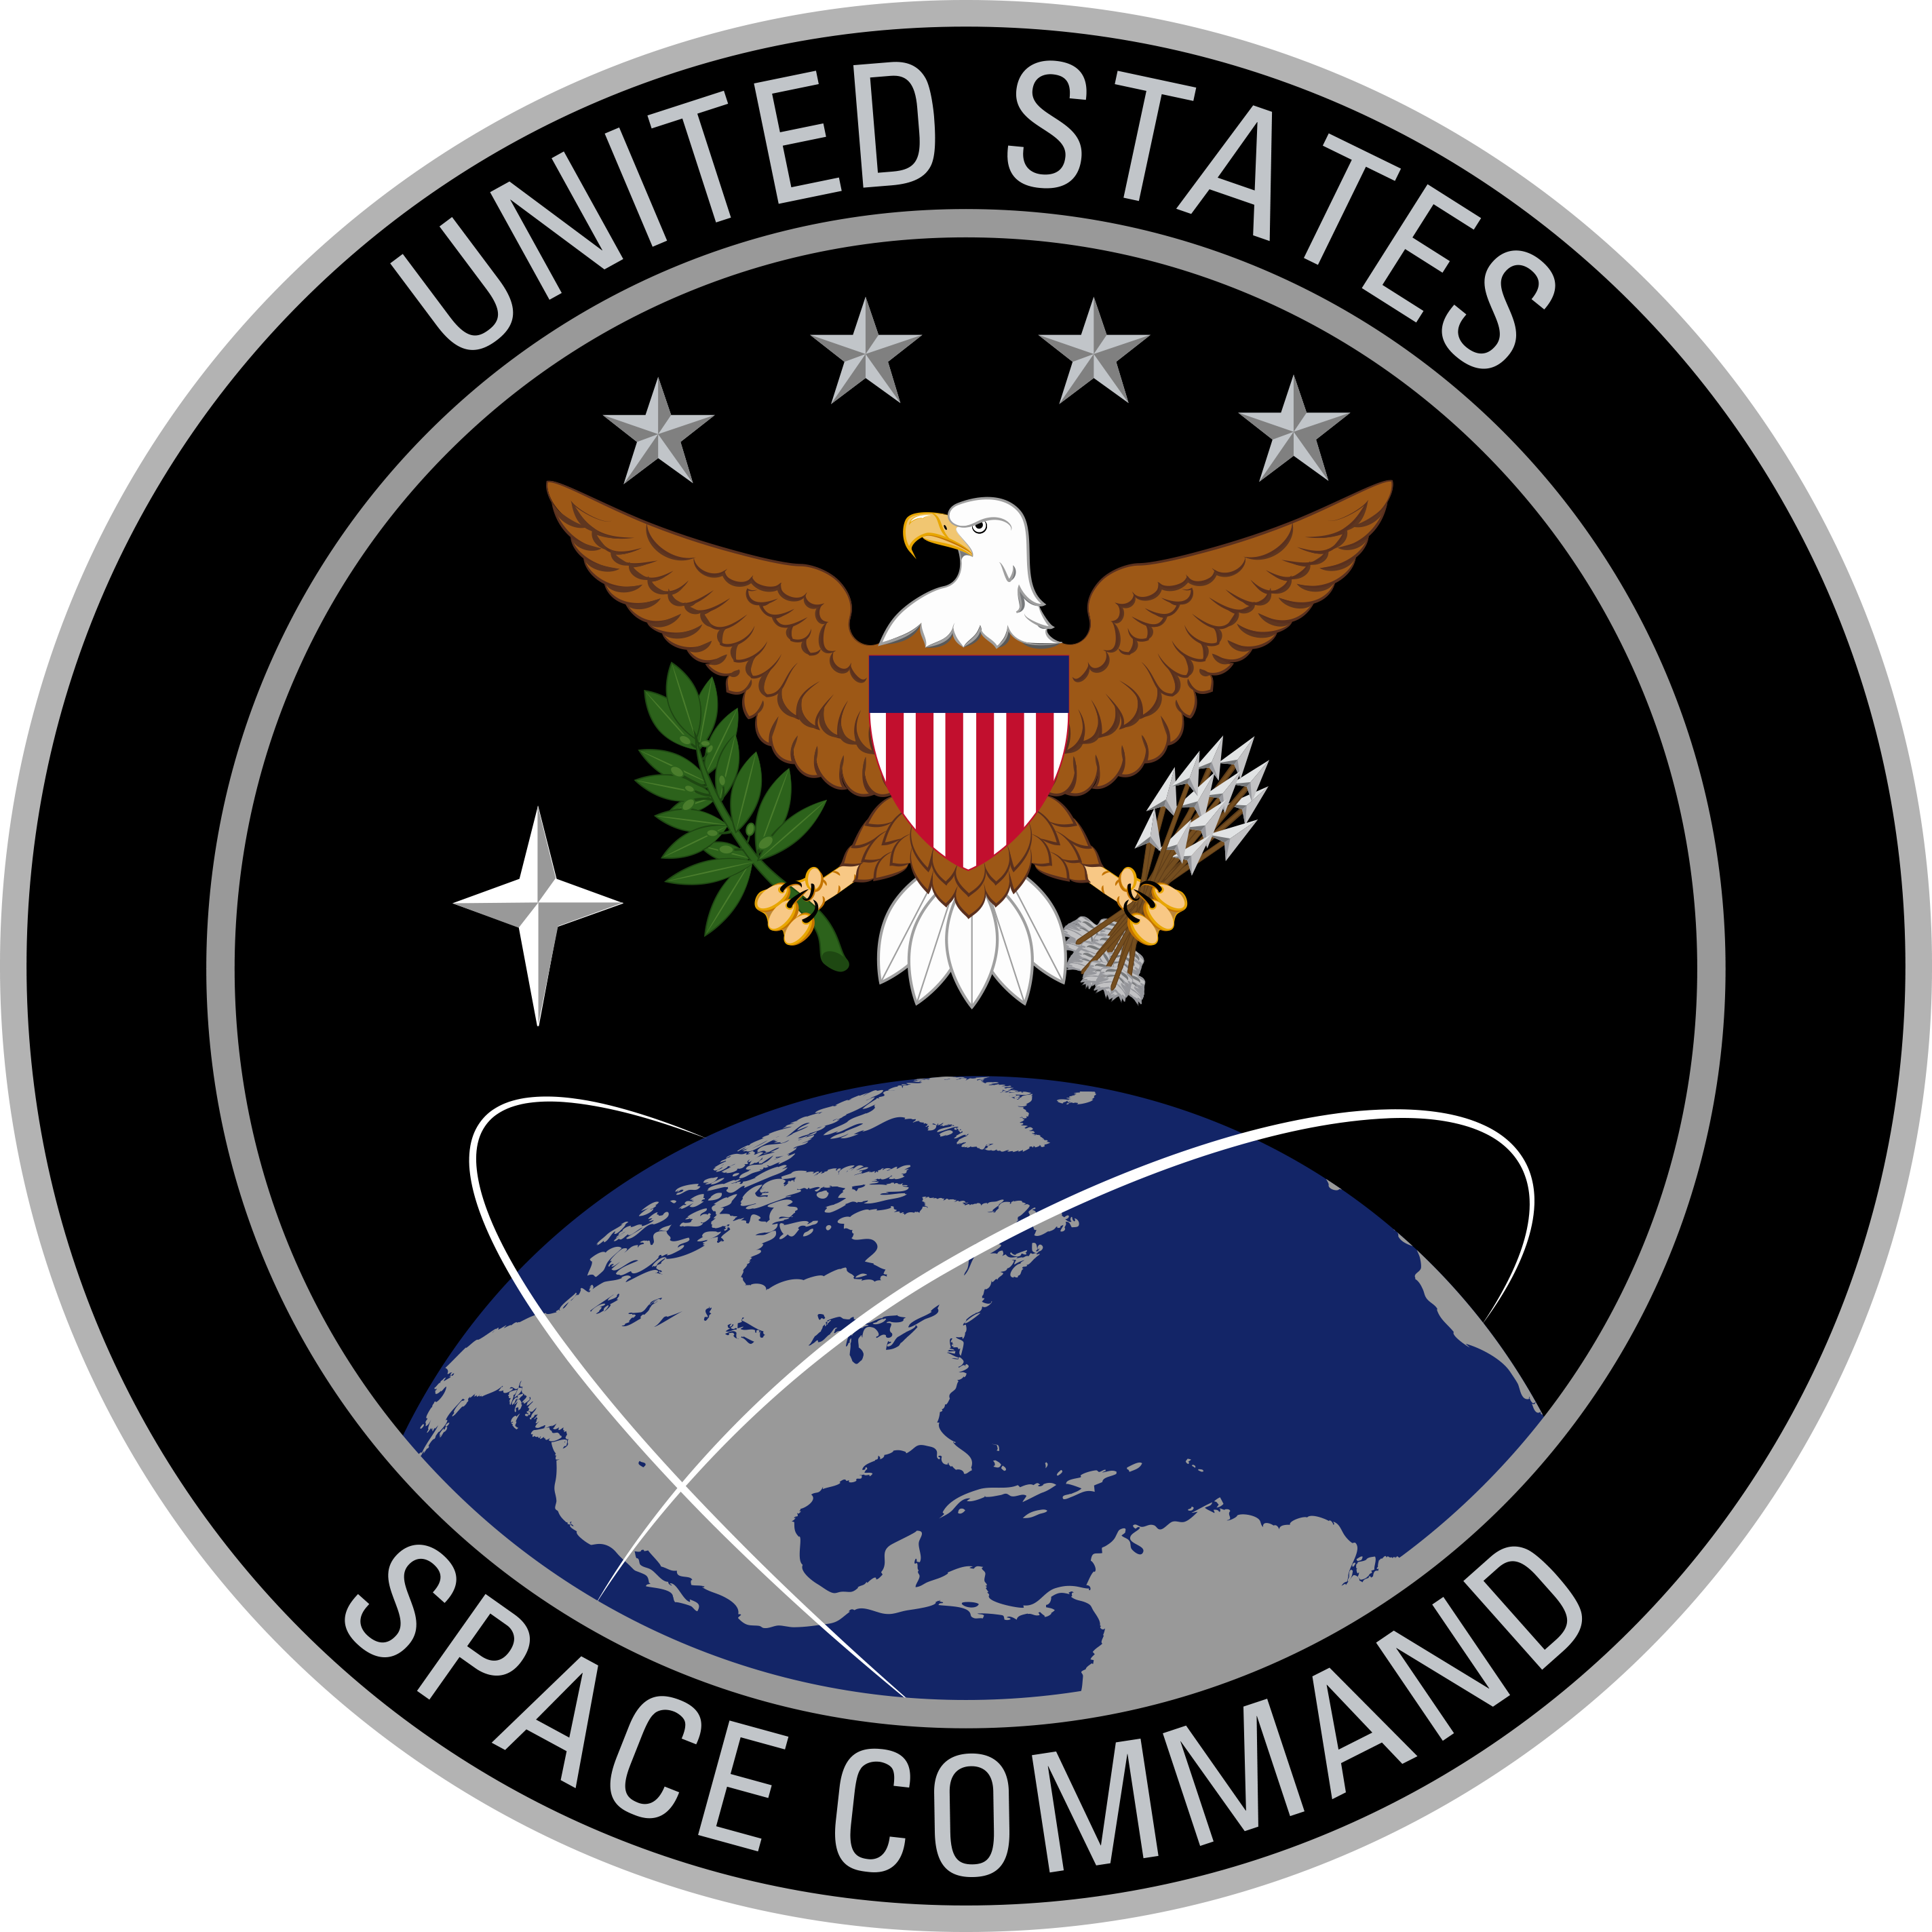 United States Space Command emblem 2019